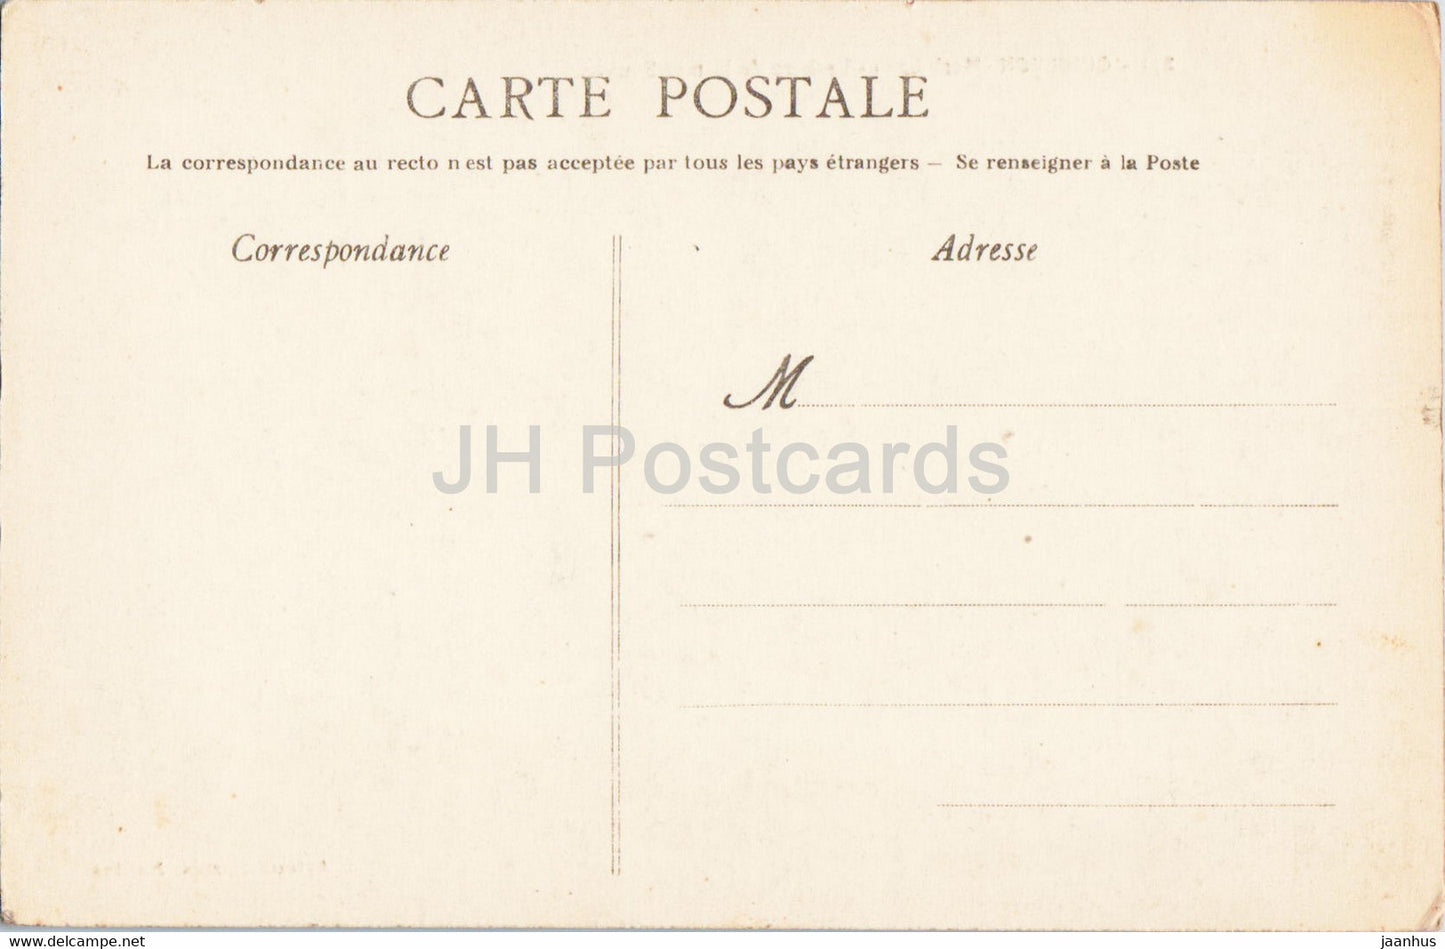 Quiberon - Rochers de la mer Sauvage - 231 - old postcard - France - unused